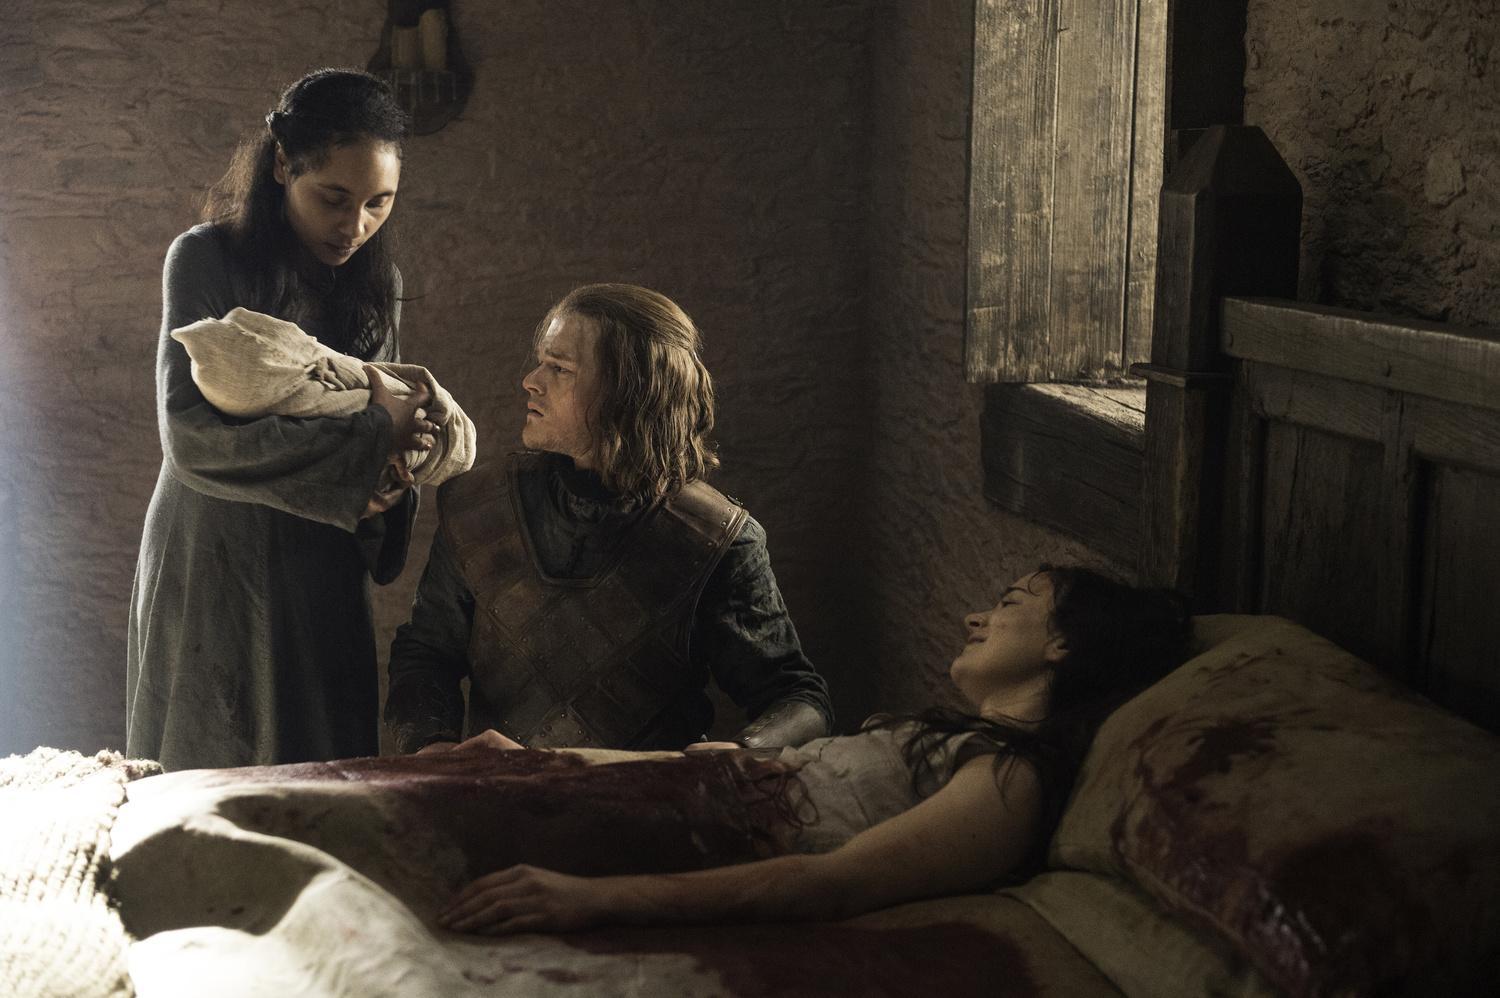 Robert Aramayo as Young Ned Stark and Aisling Franciosi as Lyanna Stark. Credit: Helen Sloan/ HBO